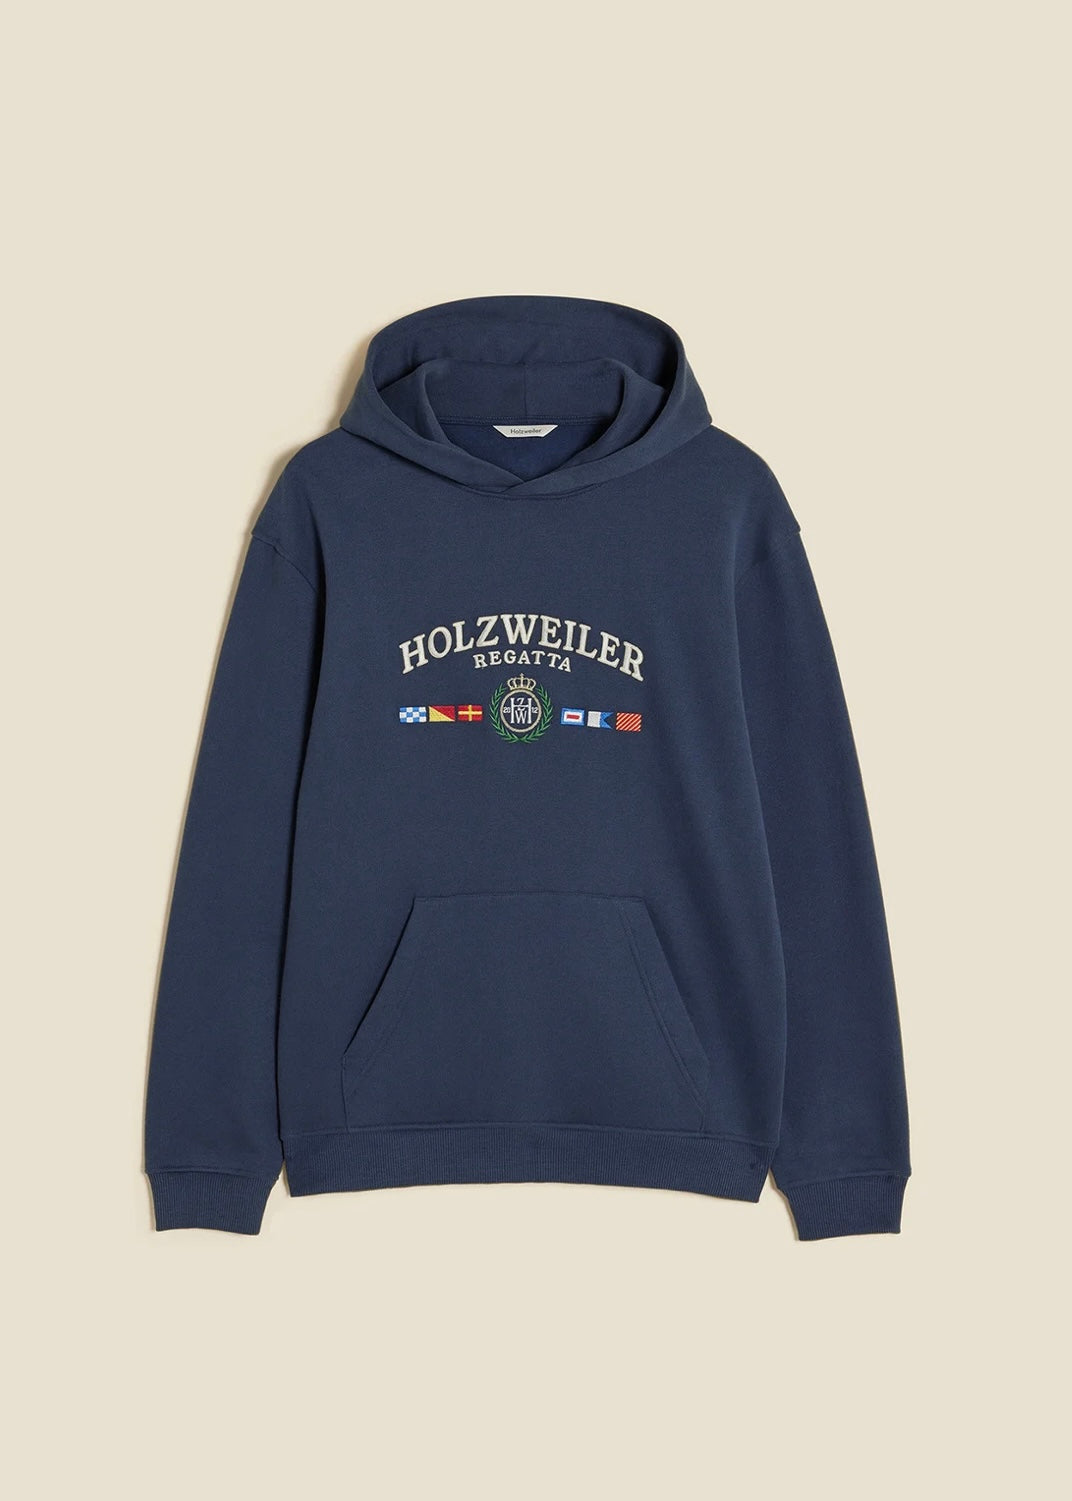 Holzweiler Cooper Regatta hoodie - Dk.Blue